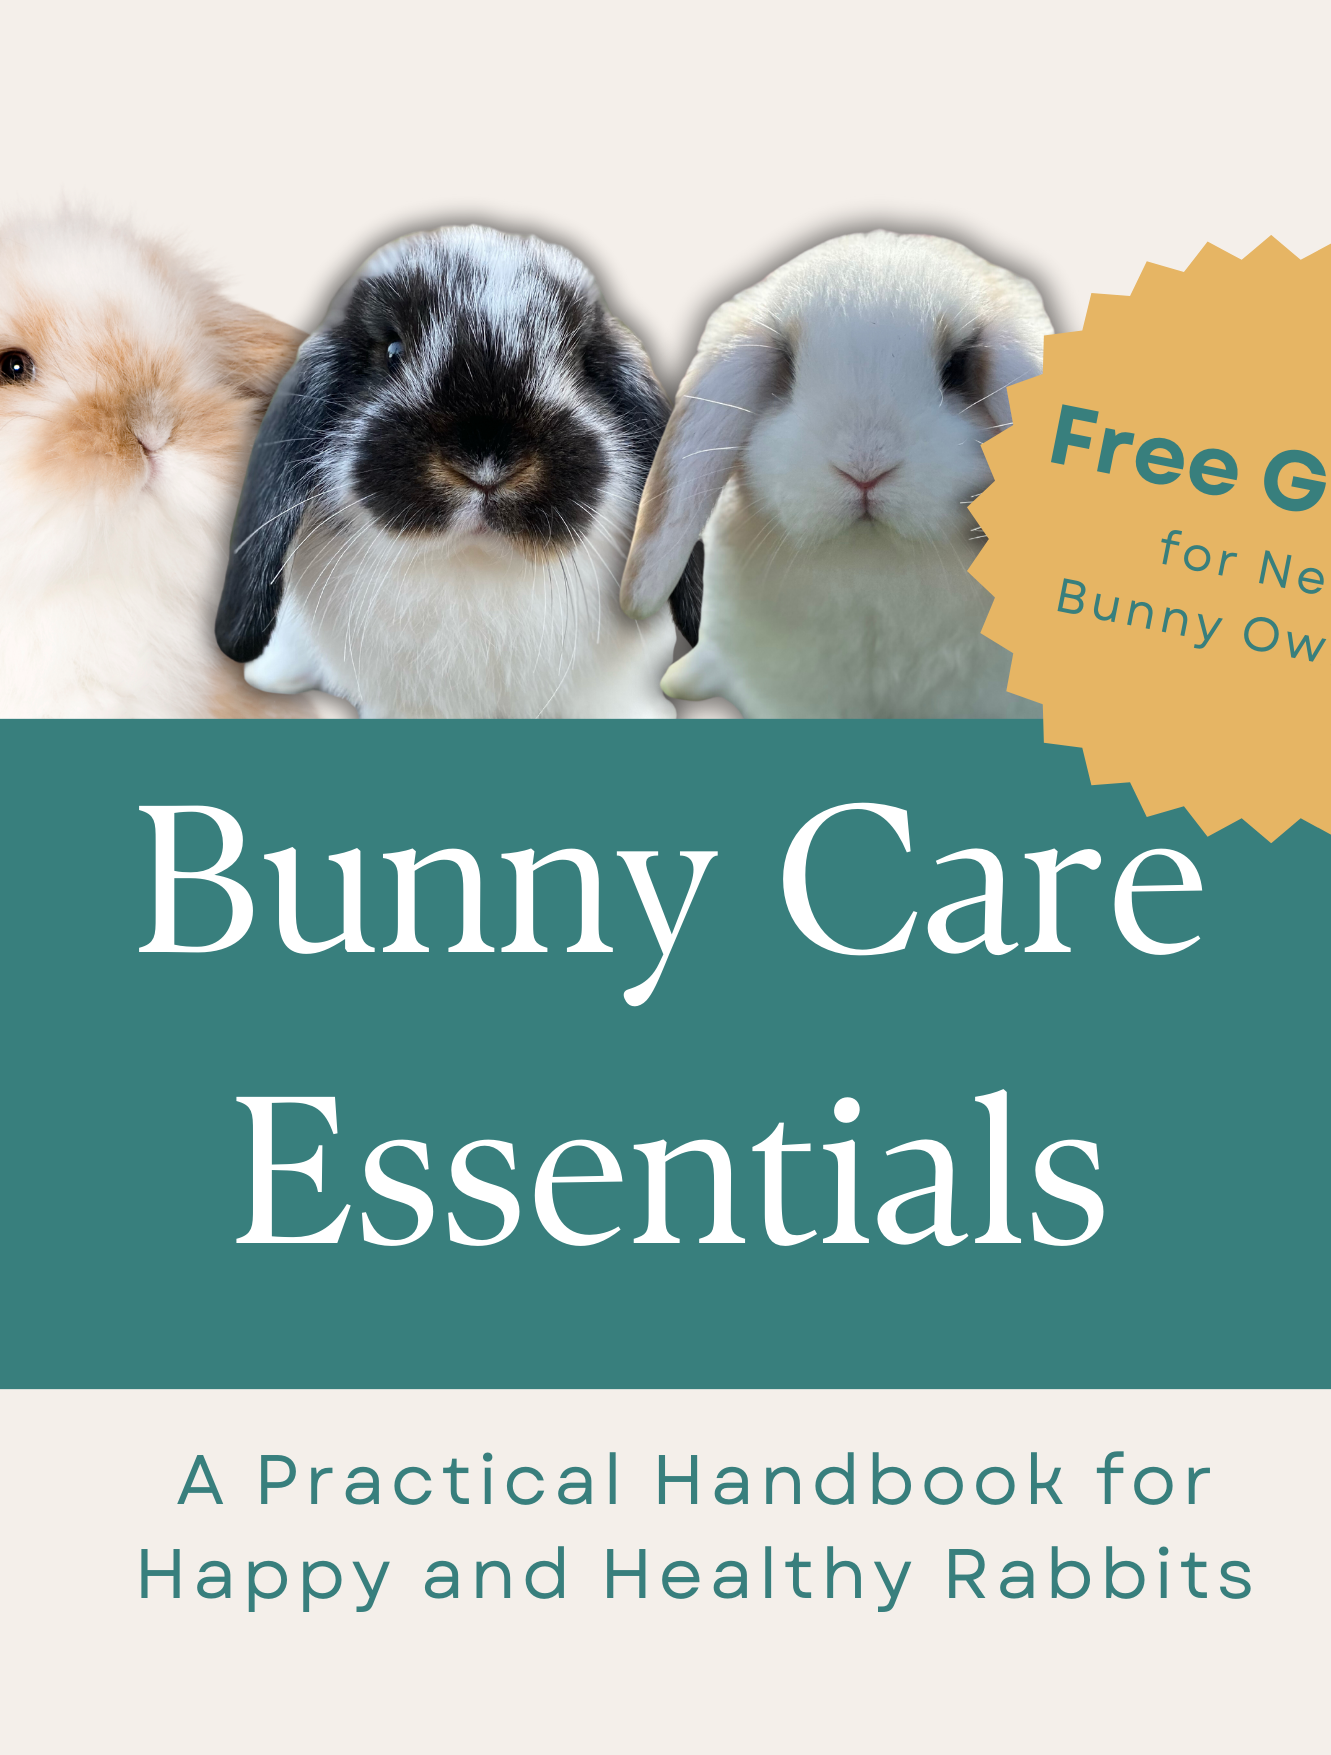 Bunny Shop - high quality rabbit toys, treats & gifts - Bun-box-society